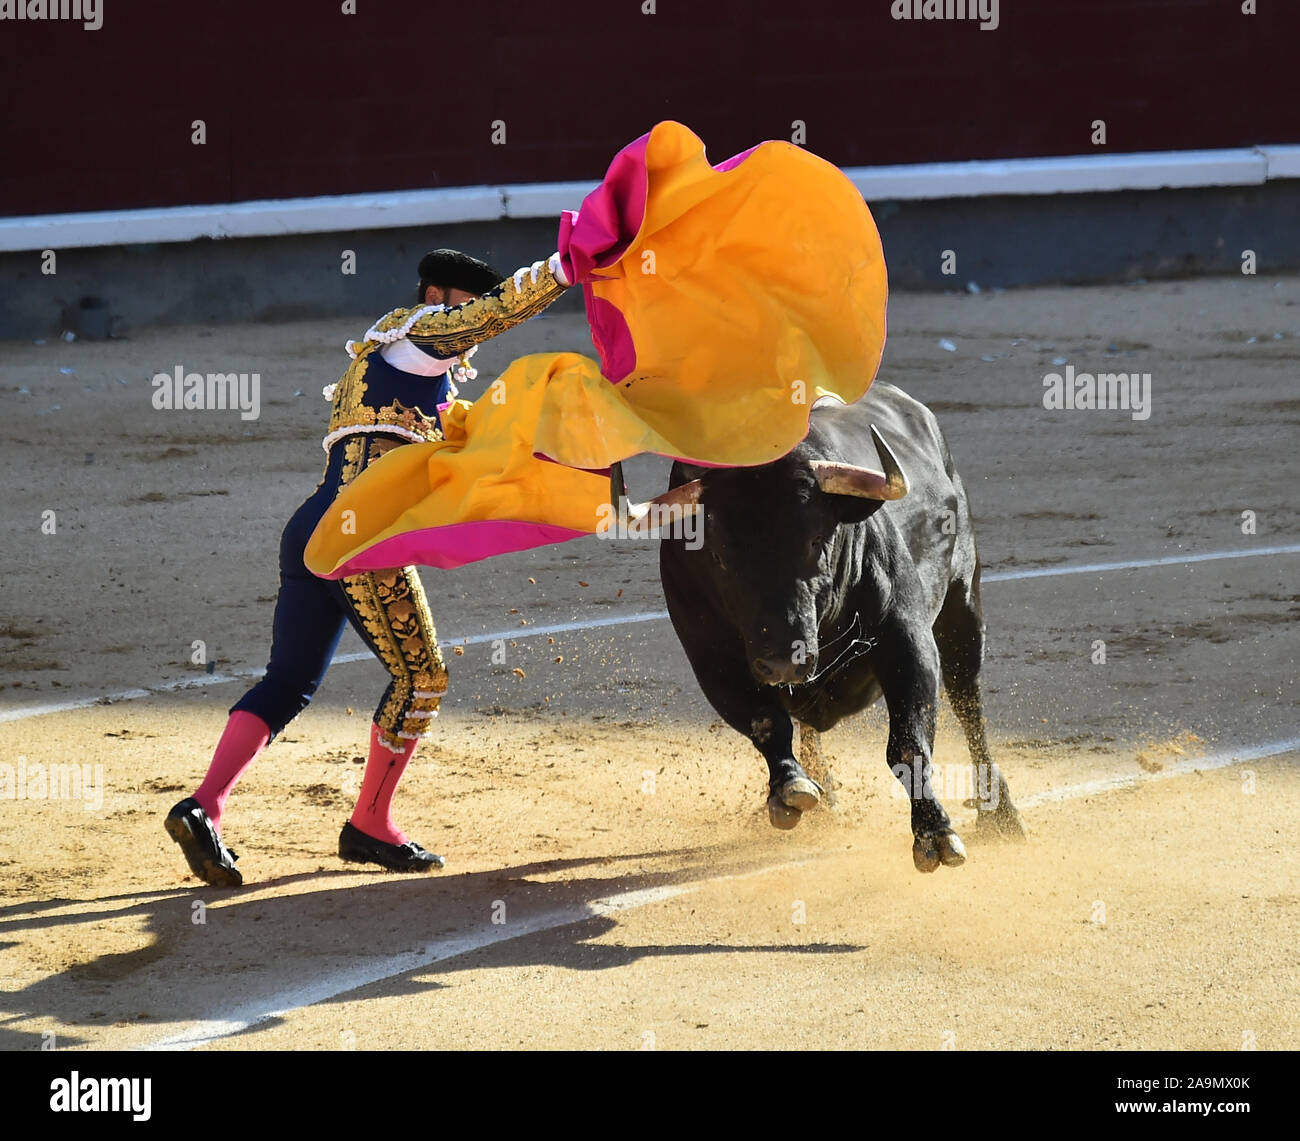 La corrida in Spagna Foto Stock